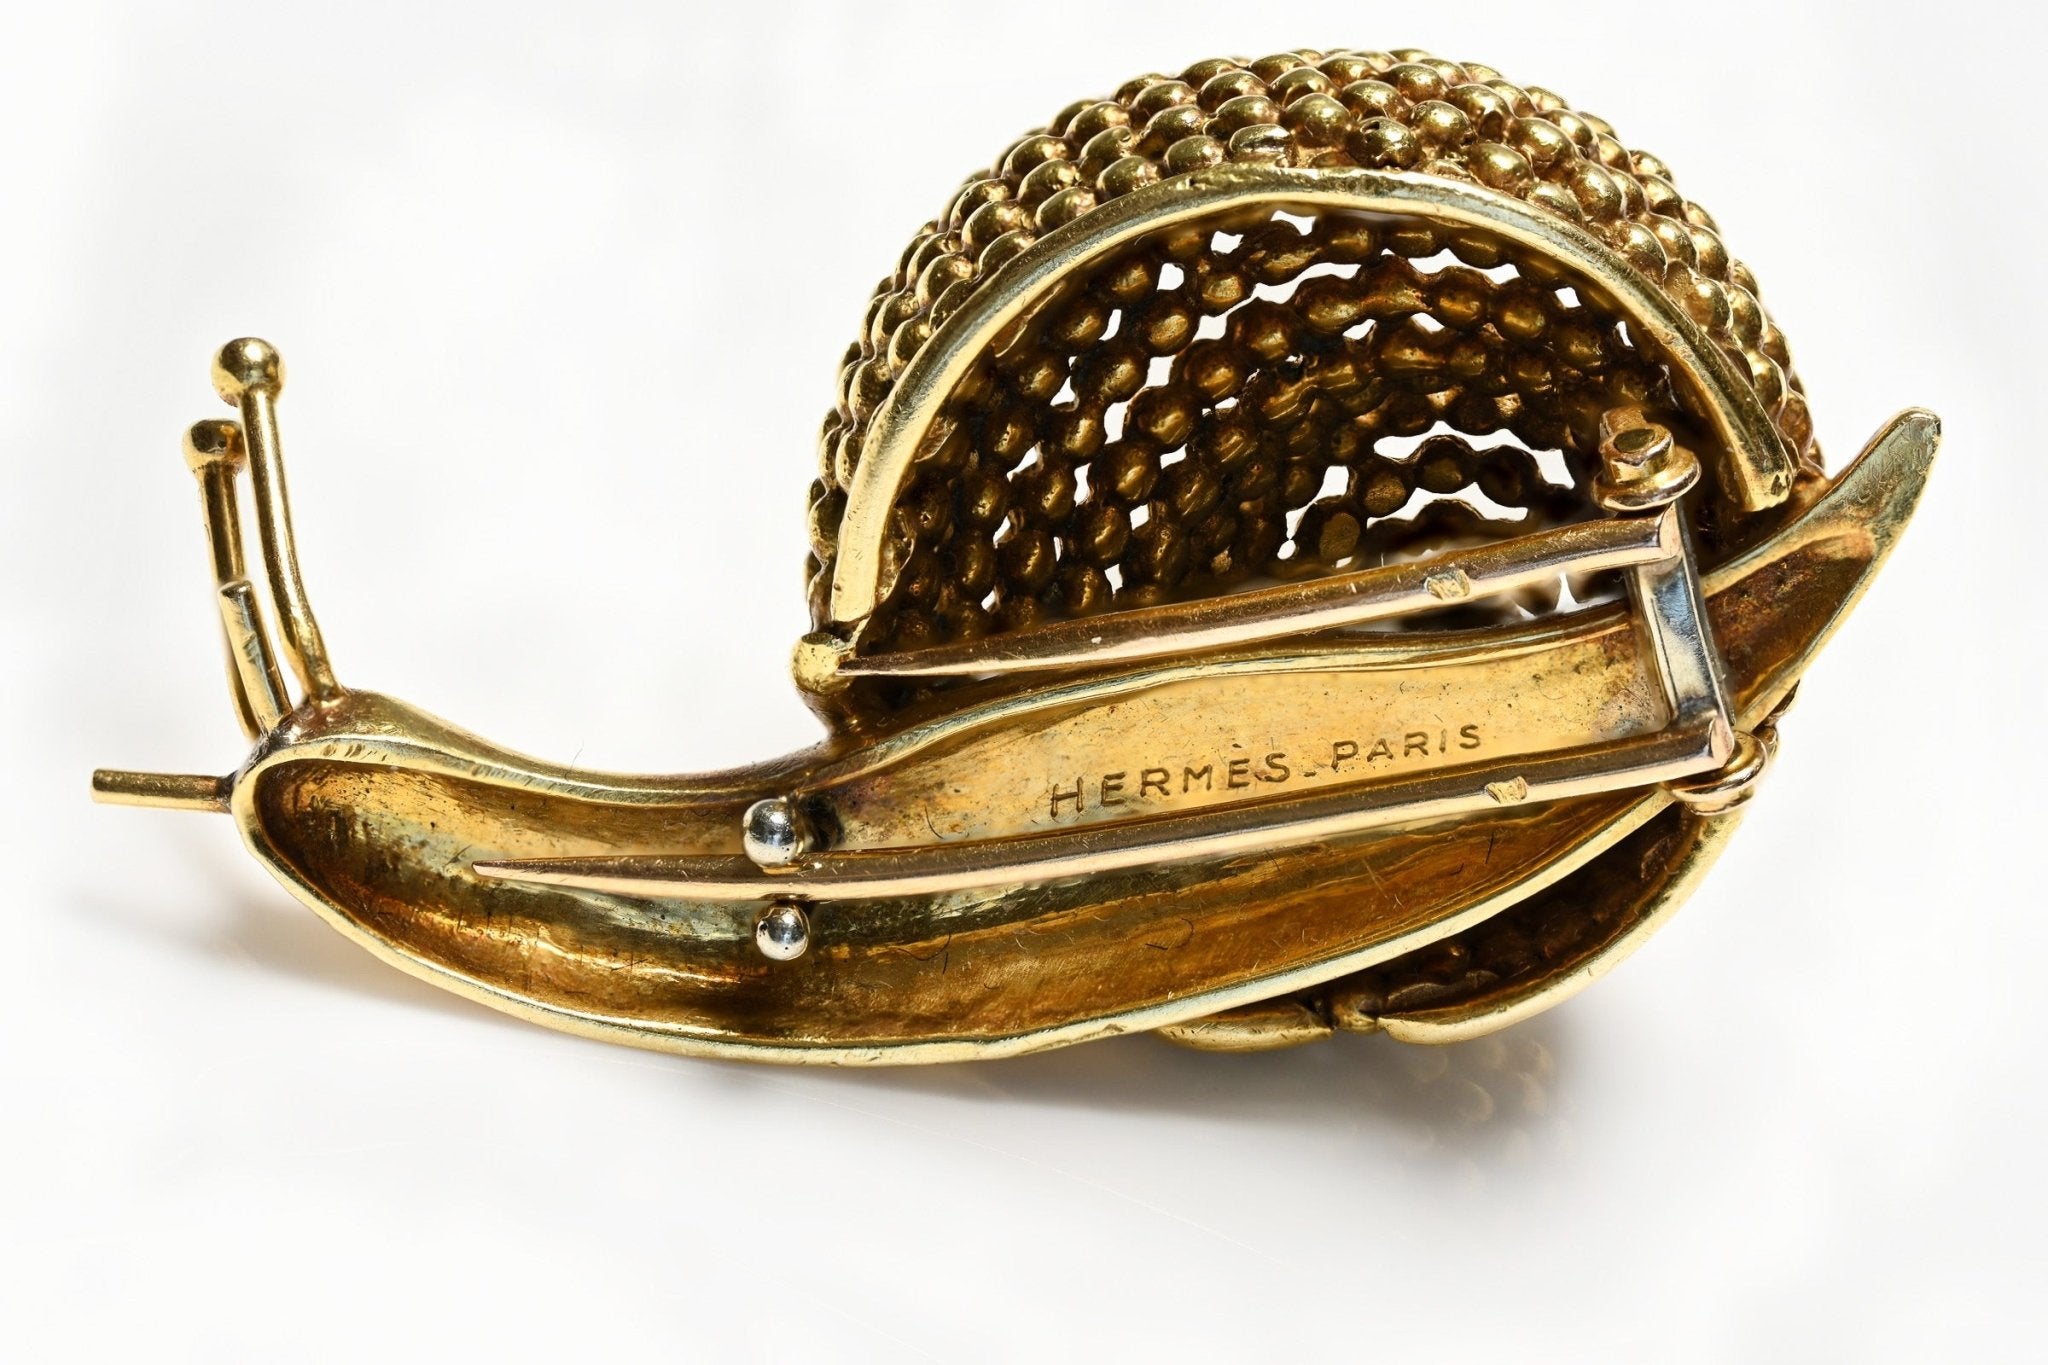 Hermes 18K Yellow Gold Snail Brooch